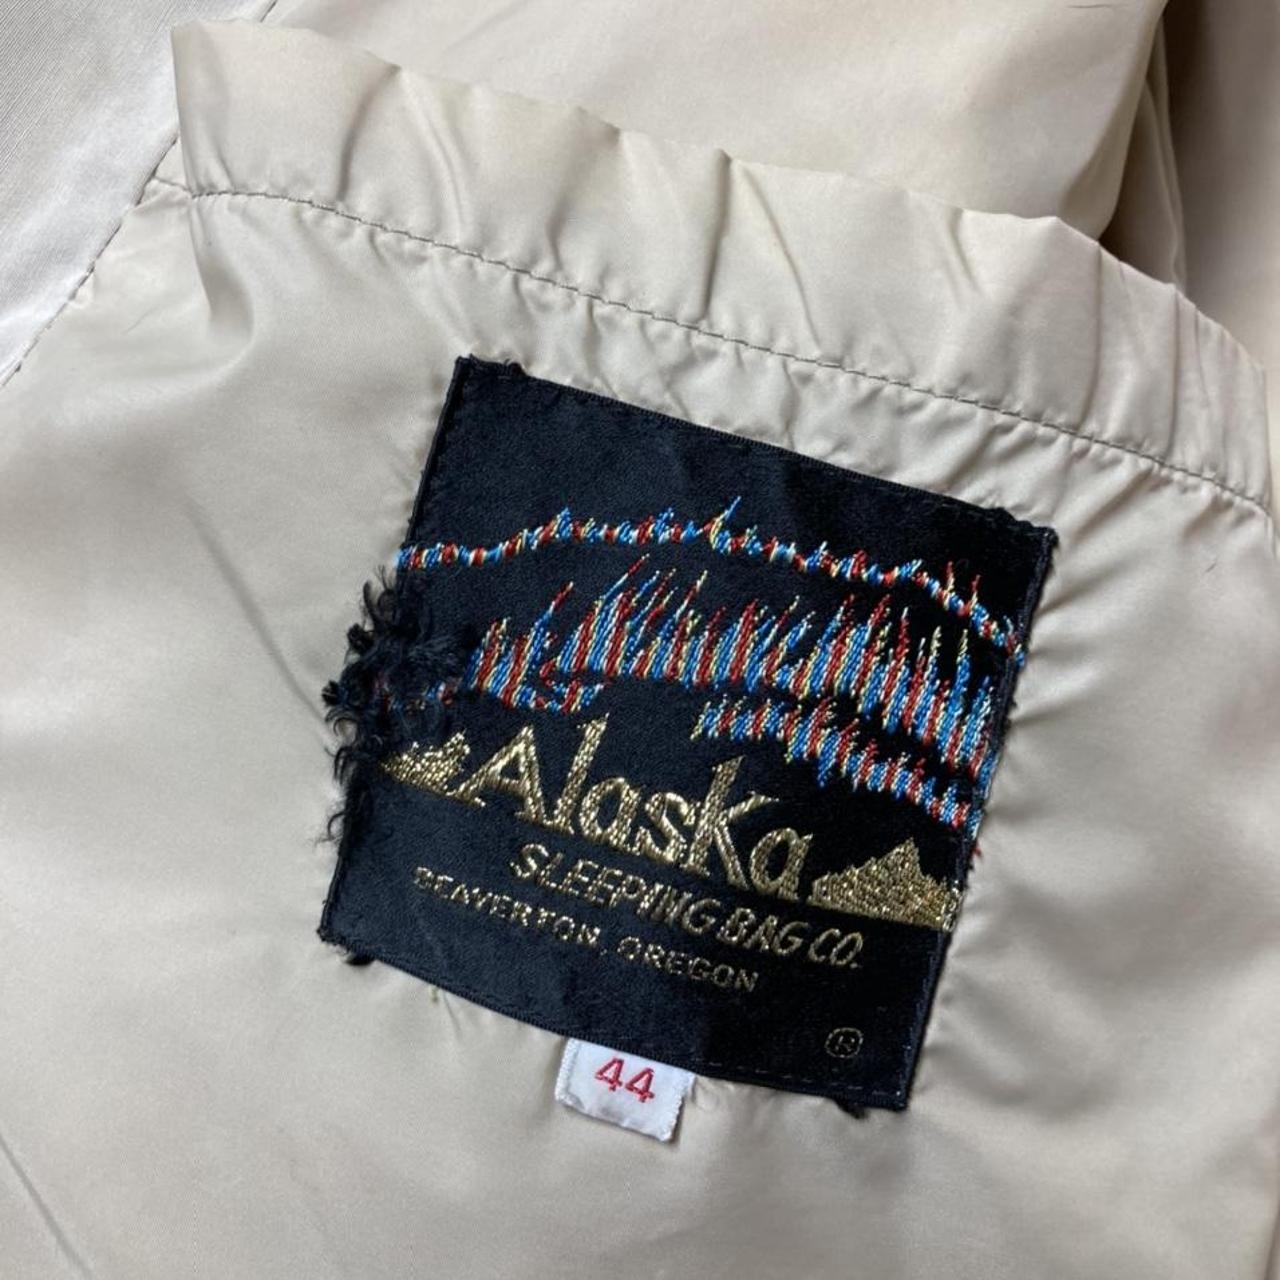 ALASKA SLEEPING BAG 40s Vintage Down Jacket Khaki Zipper Crown